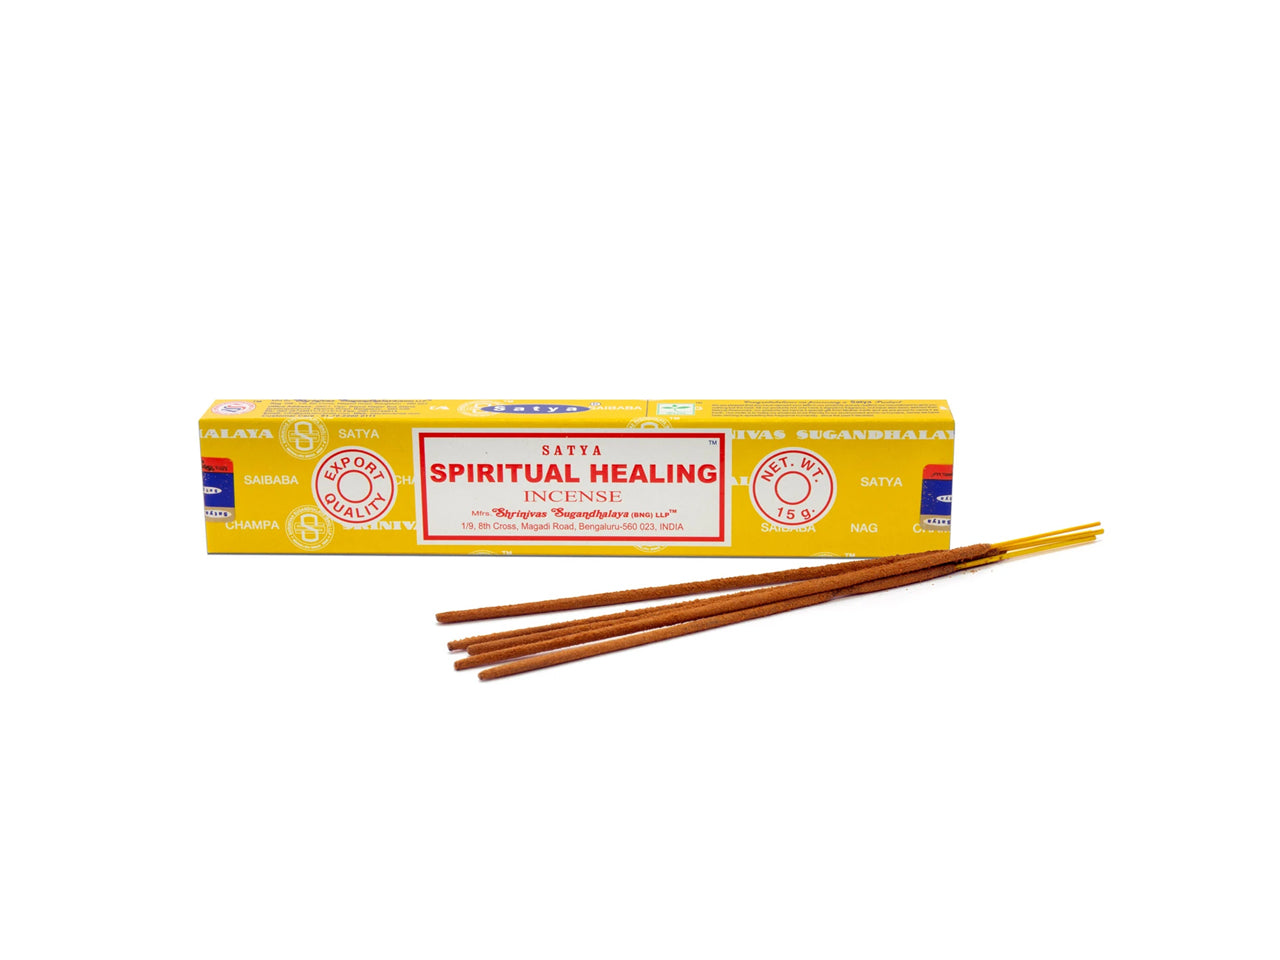 Spiritual Healing Incense Sticks by Satya